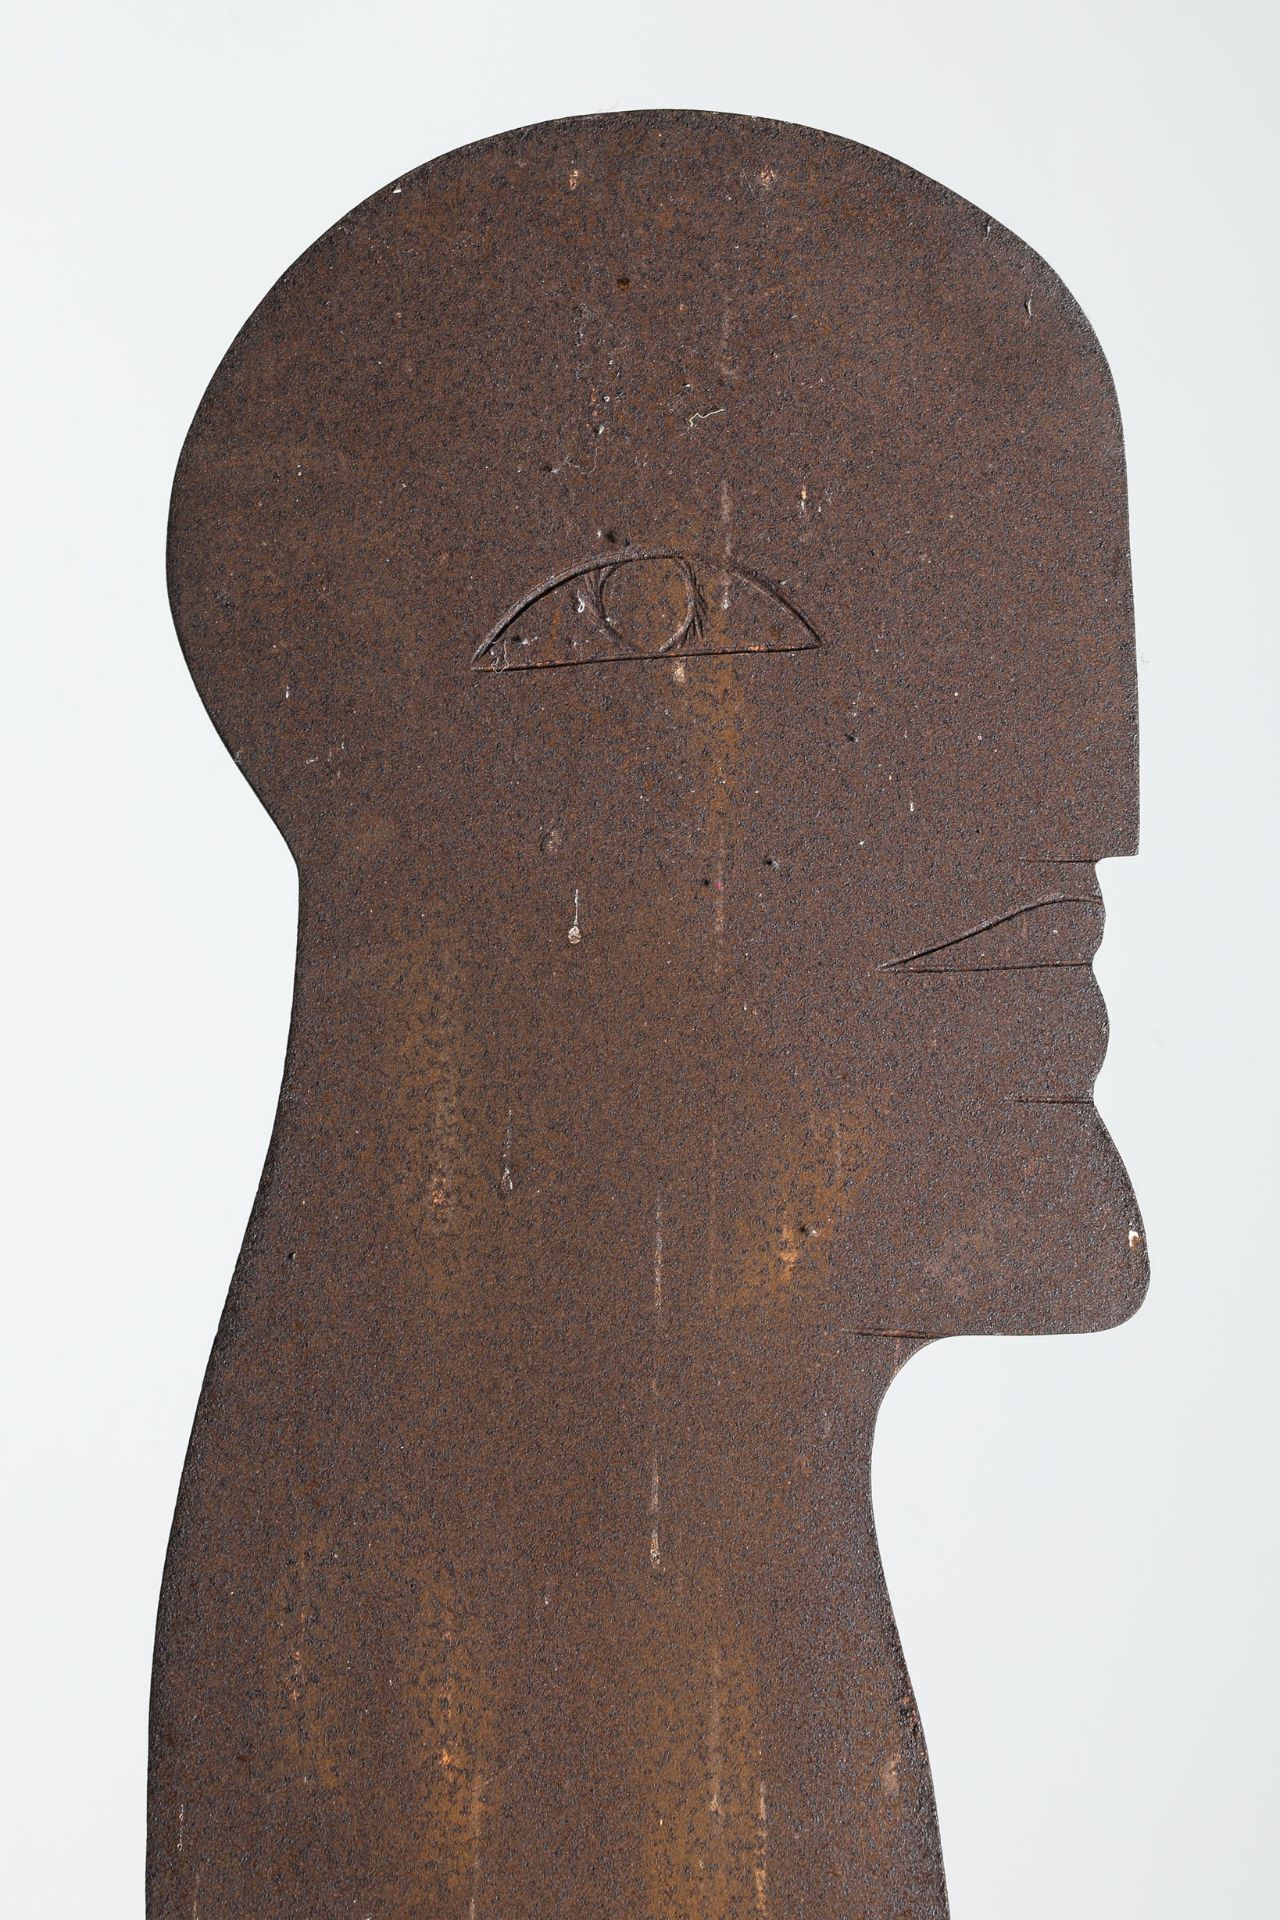 Horst Antes*, Figur 1000, Corten steel, h. 220 cm - Image 2 of 6